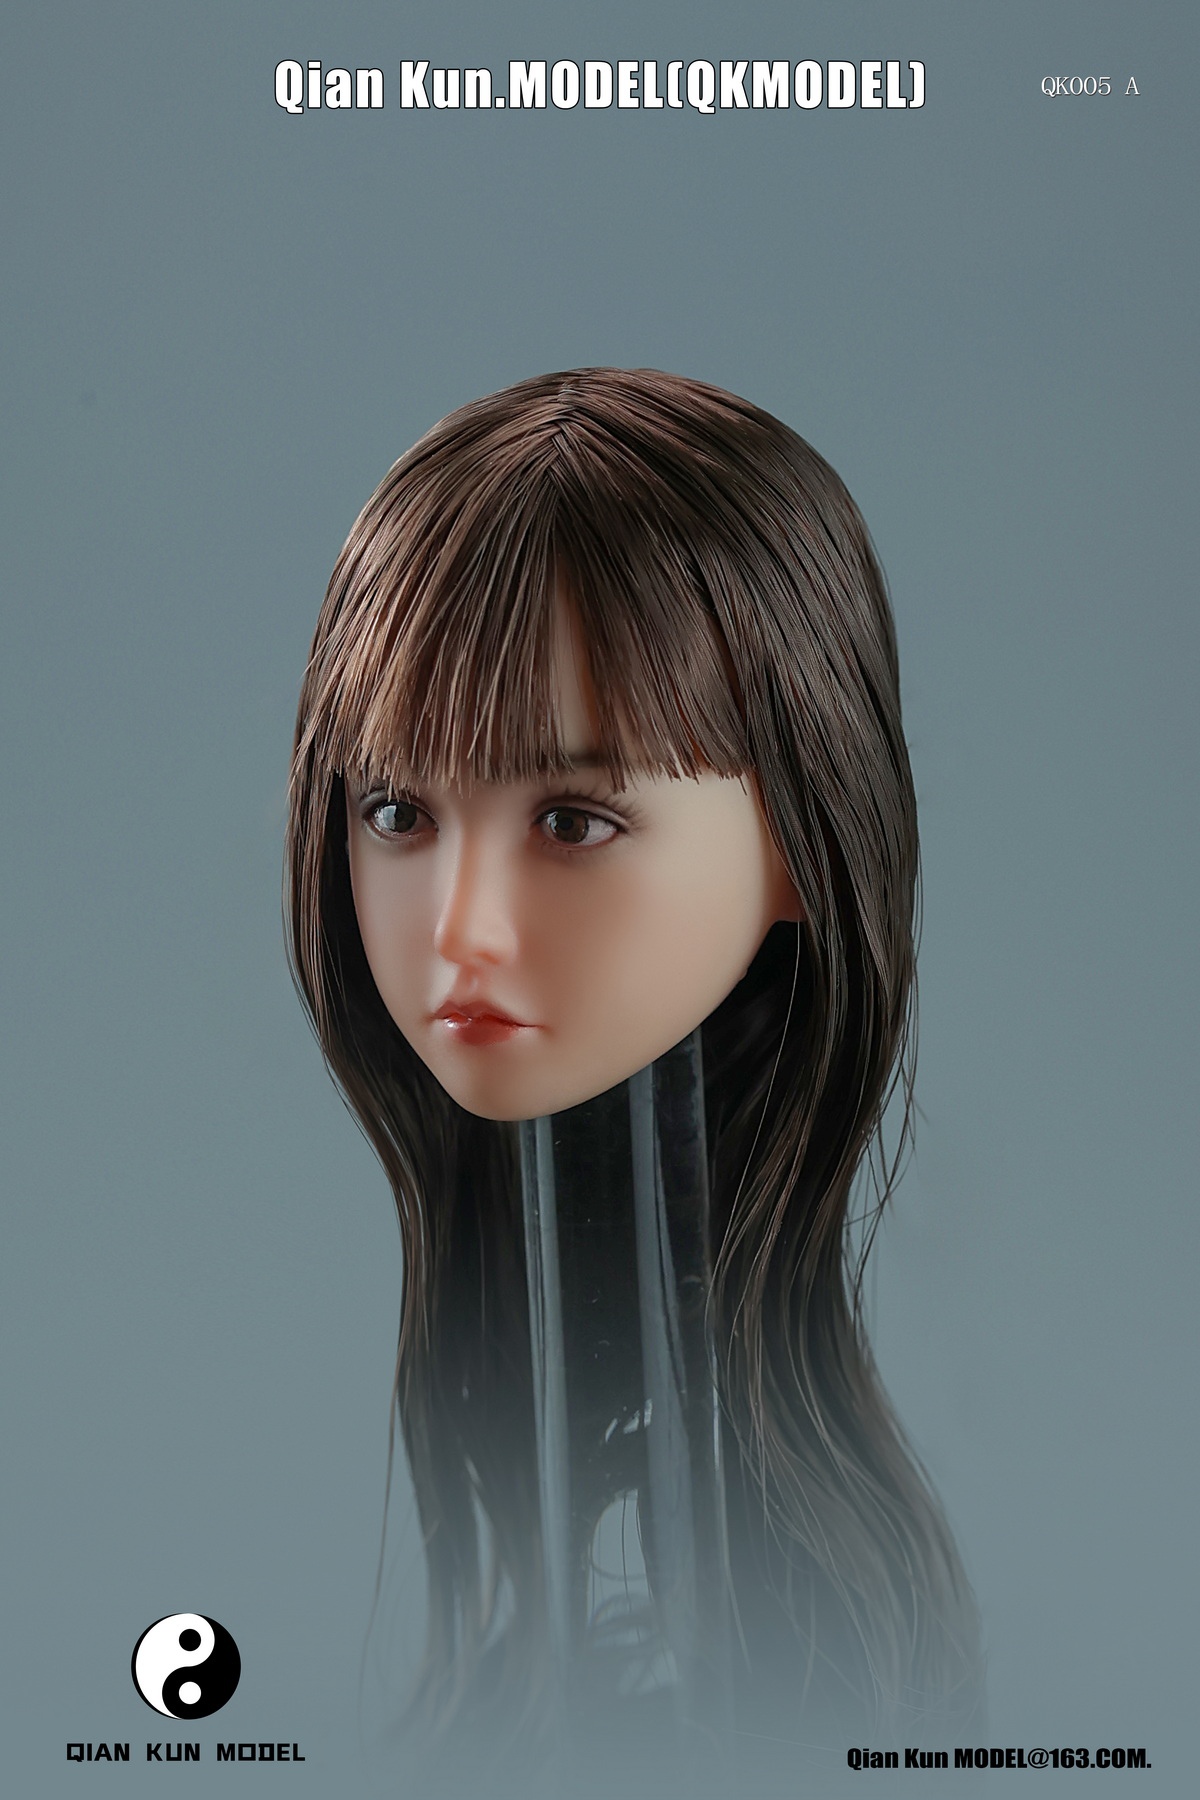 Female - NEW PRODUCT: Qian Kun.Model - Sweet Asian Female Head Sculpture (QK005-A/B/C) 03100